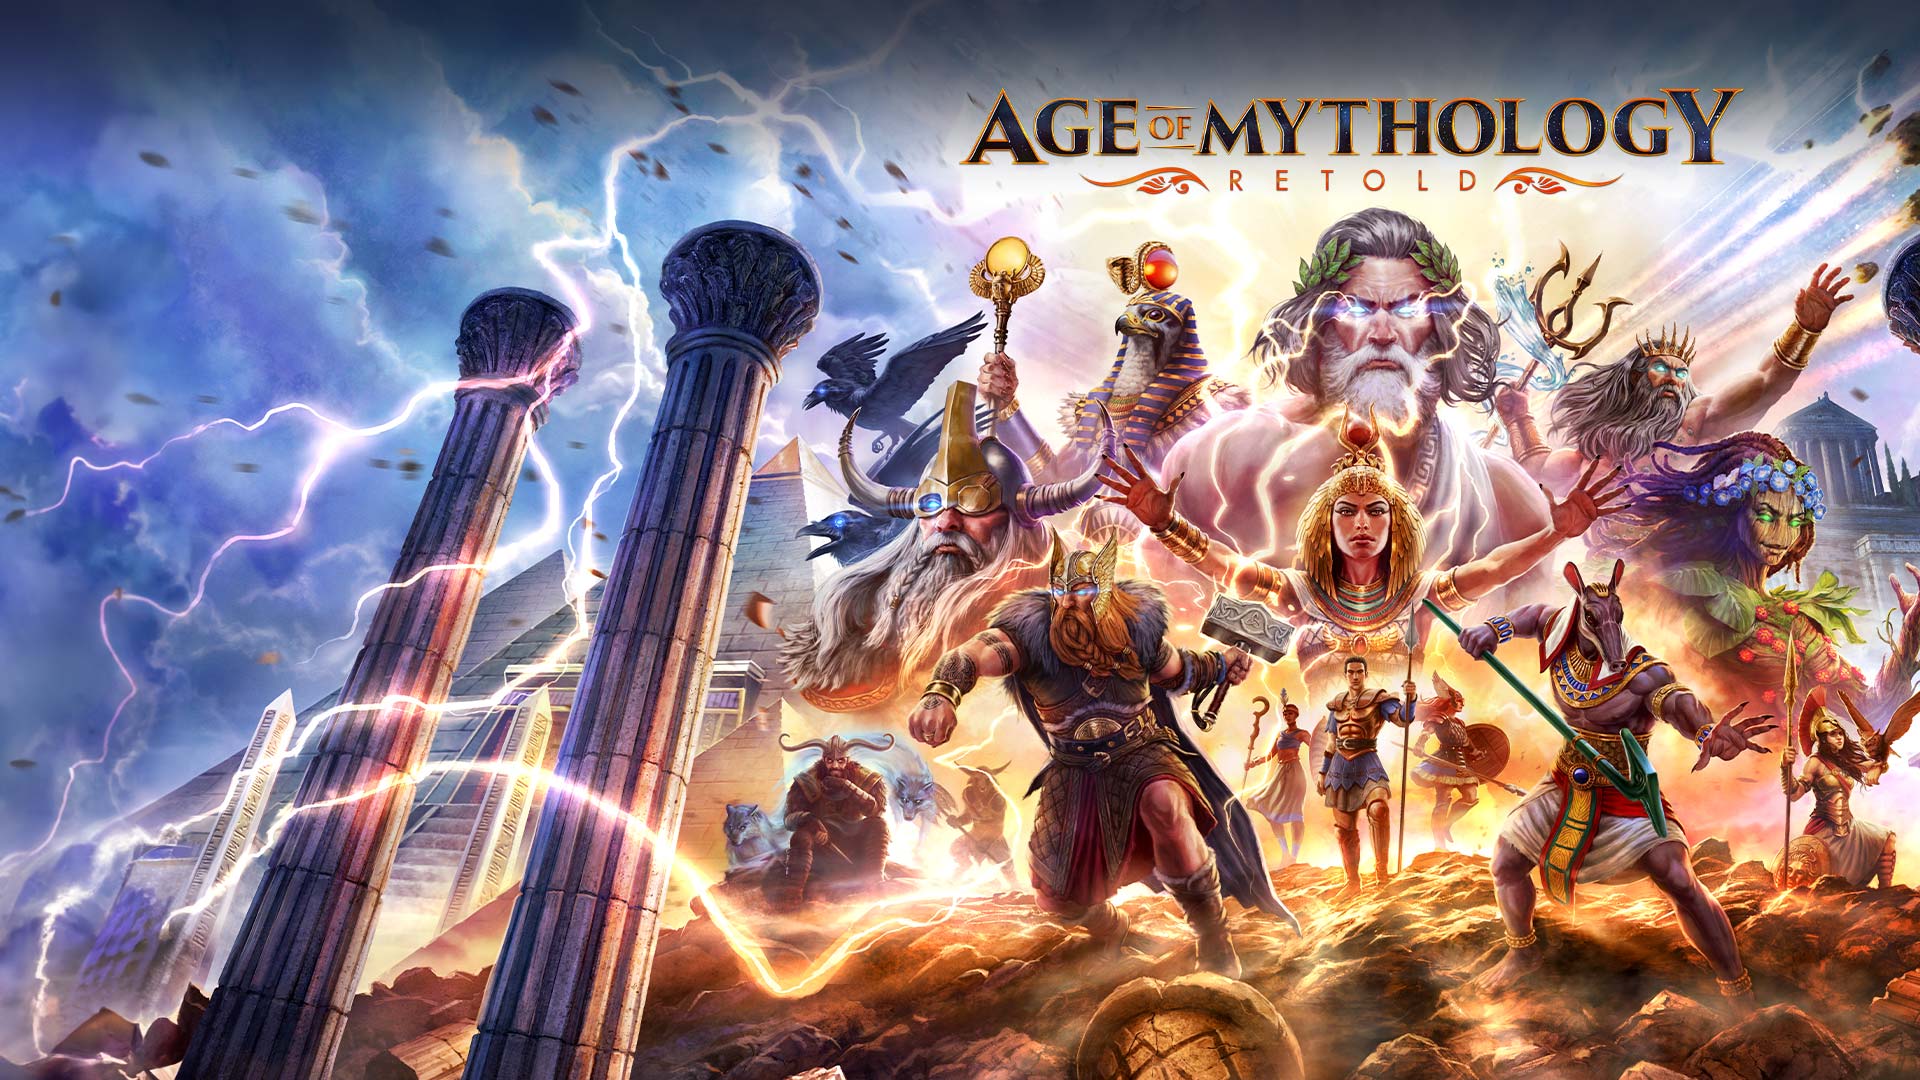 Age of Mythology Retold 標誌，各種不同神祇和神話從天而降。